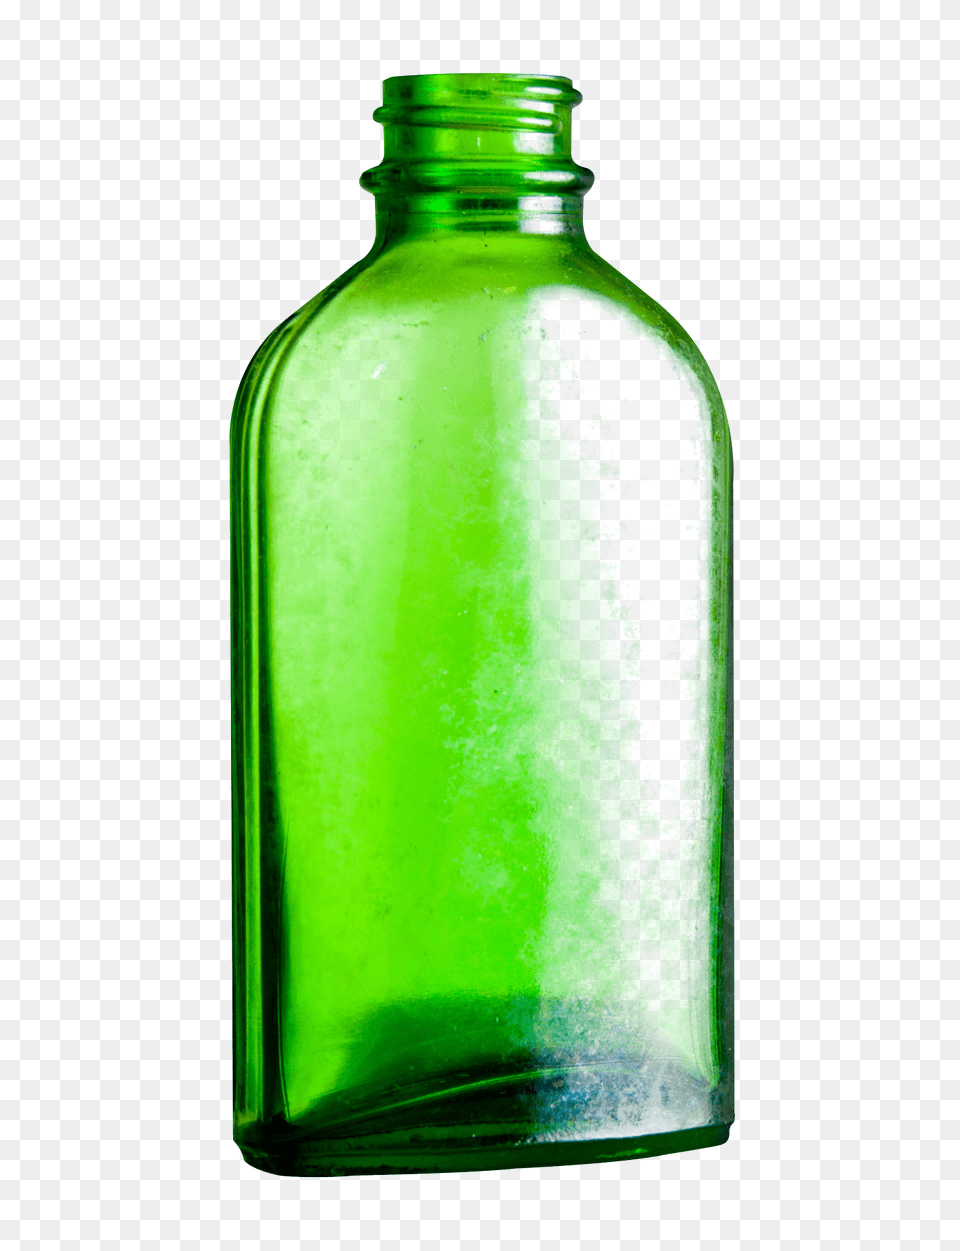 Empty Glass Bottle Shaker, Jar Png Image